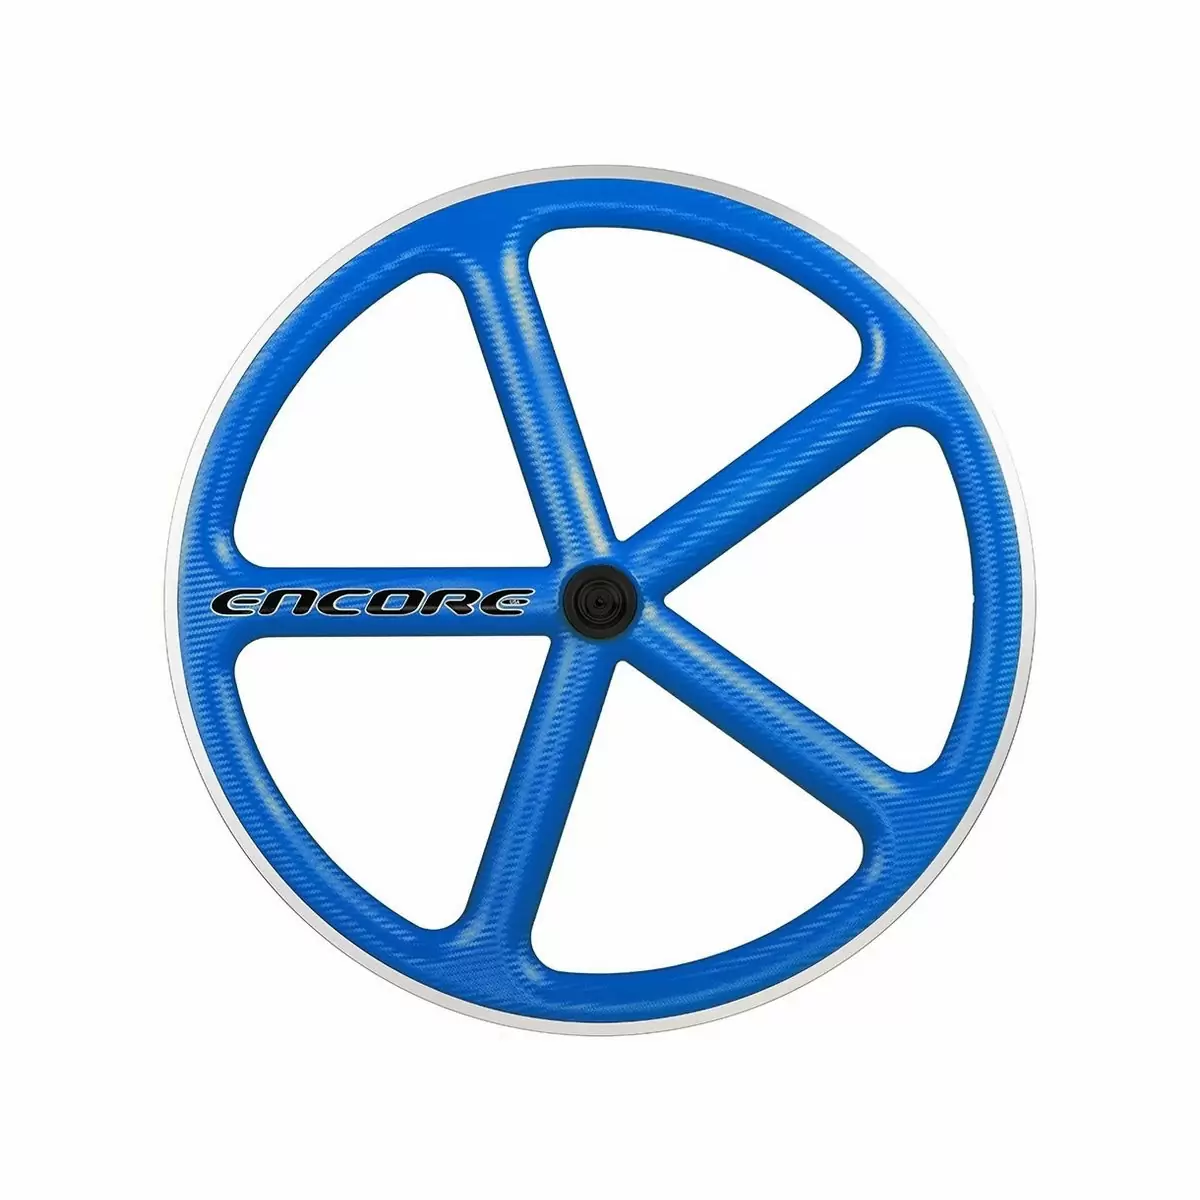 front wheel 700c track 5 spokes carbon weave blue msw - image